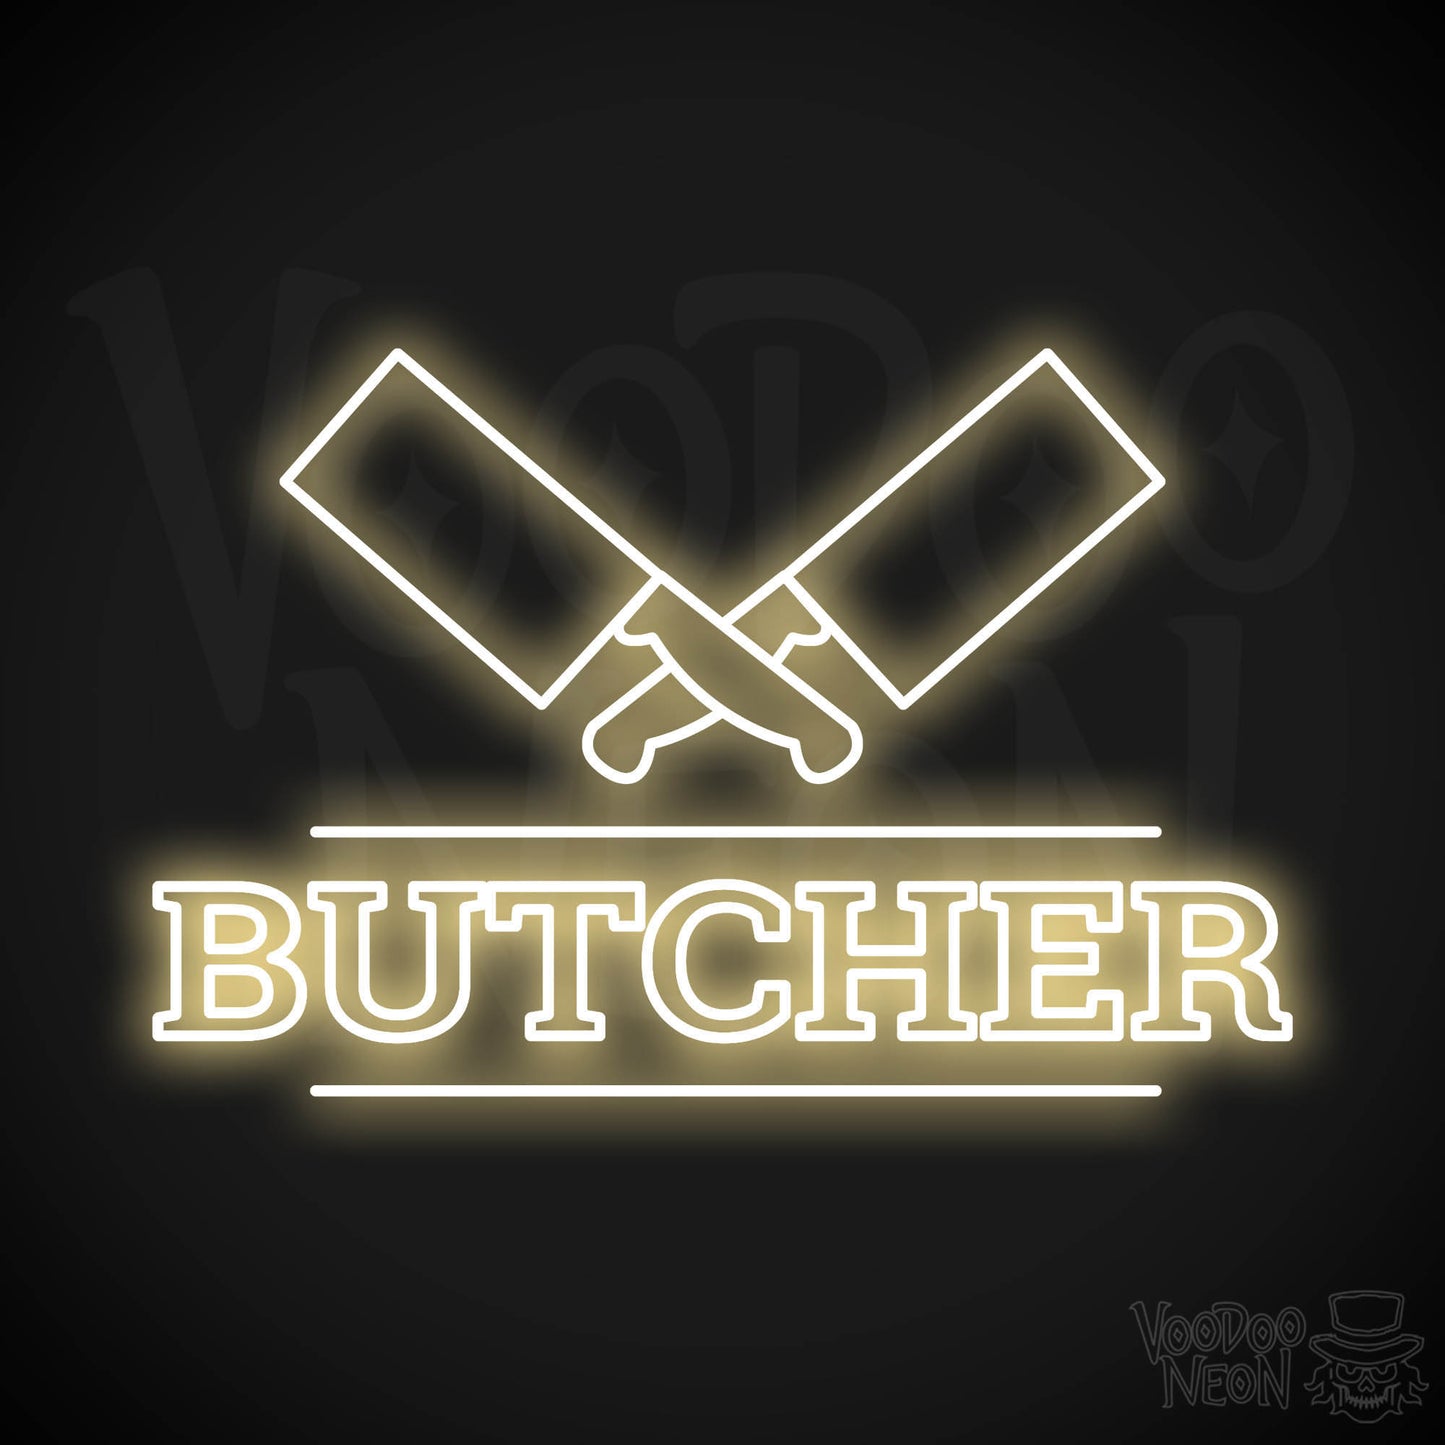 Butcher Shop LED Neon - Warm White